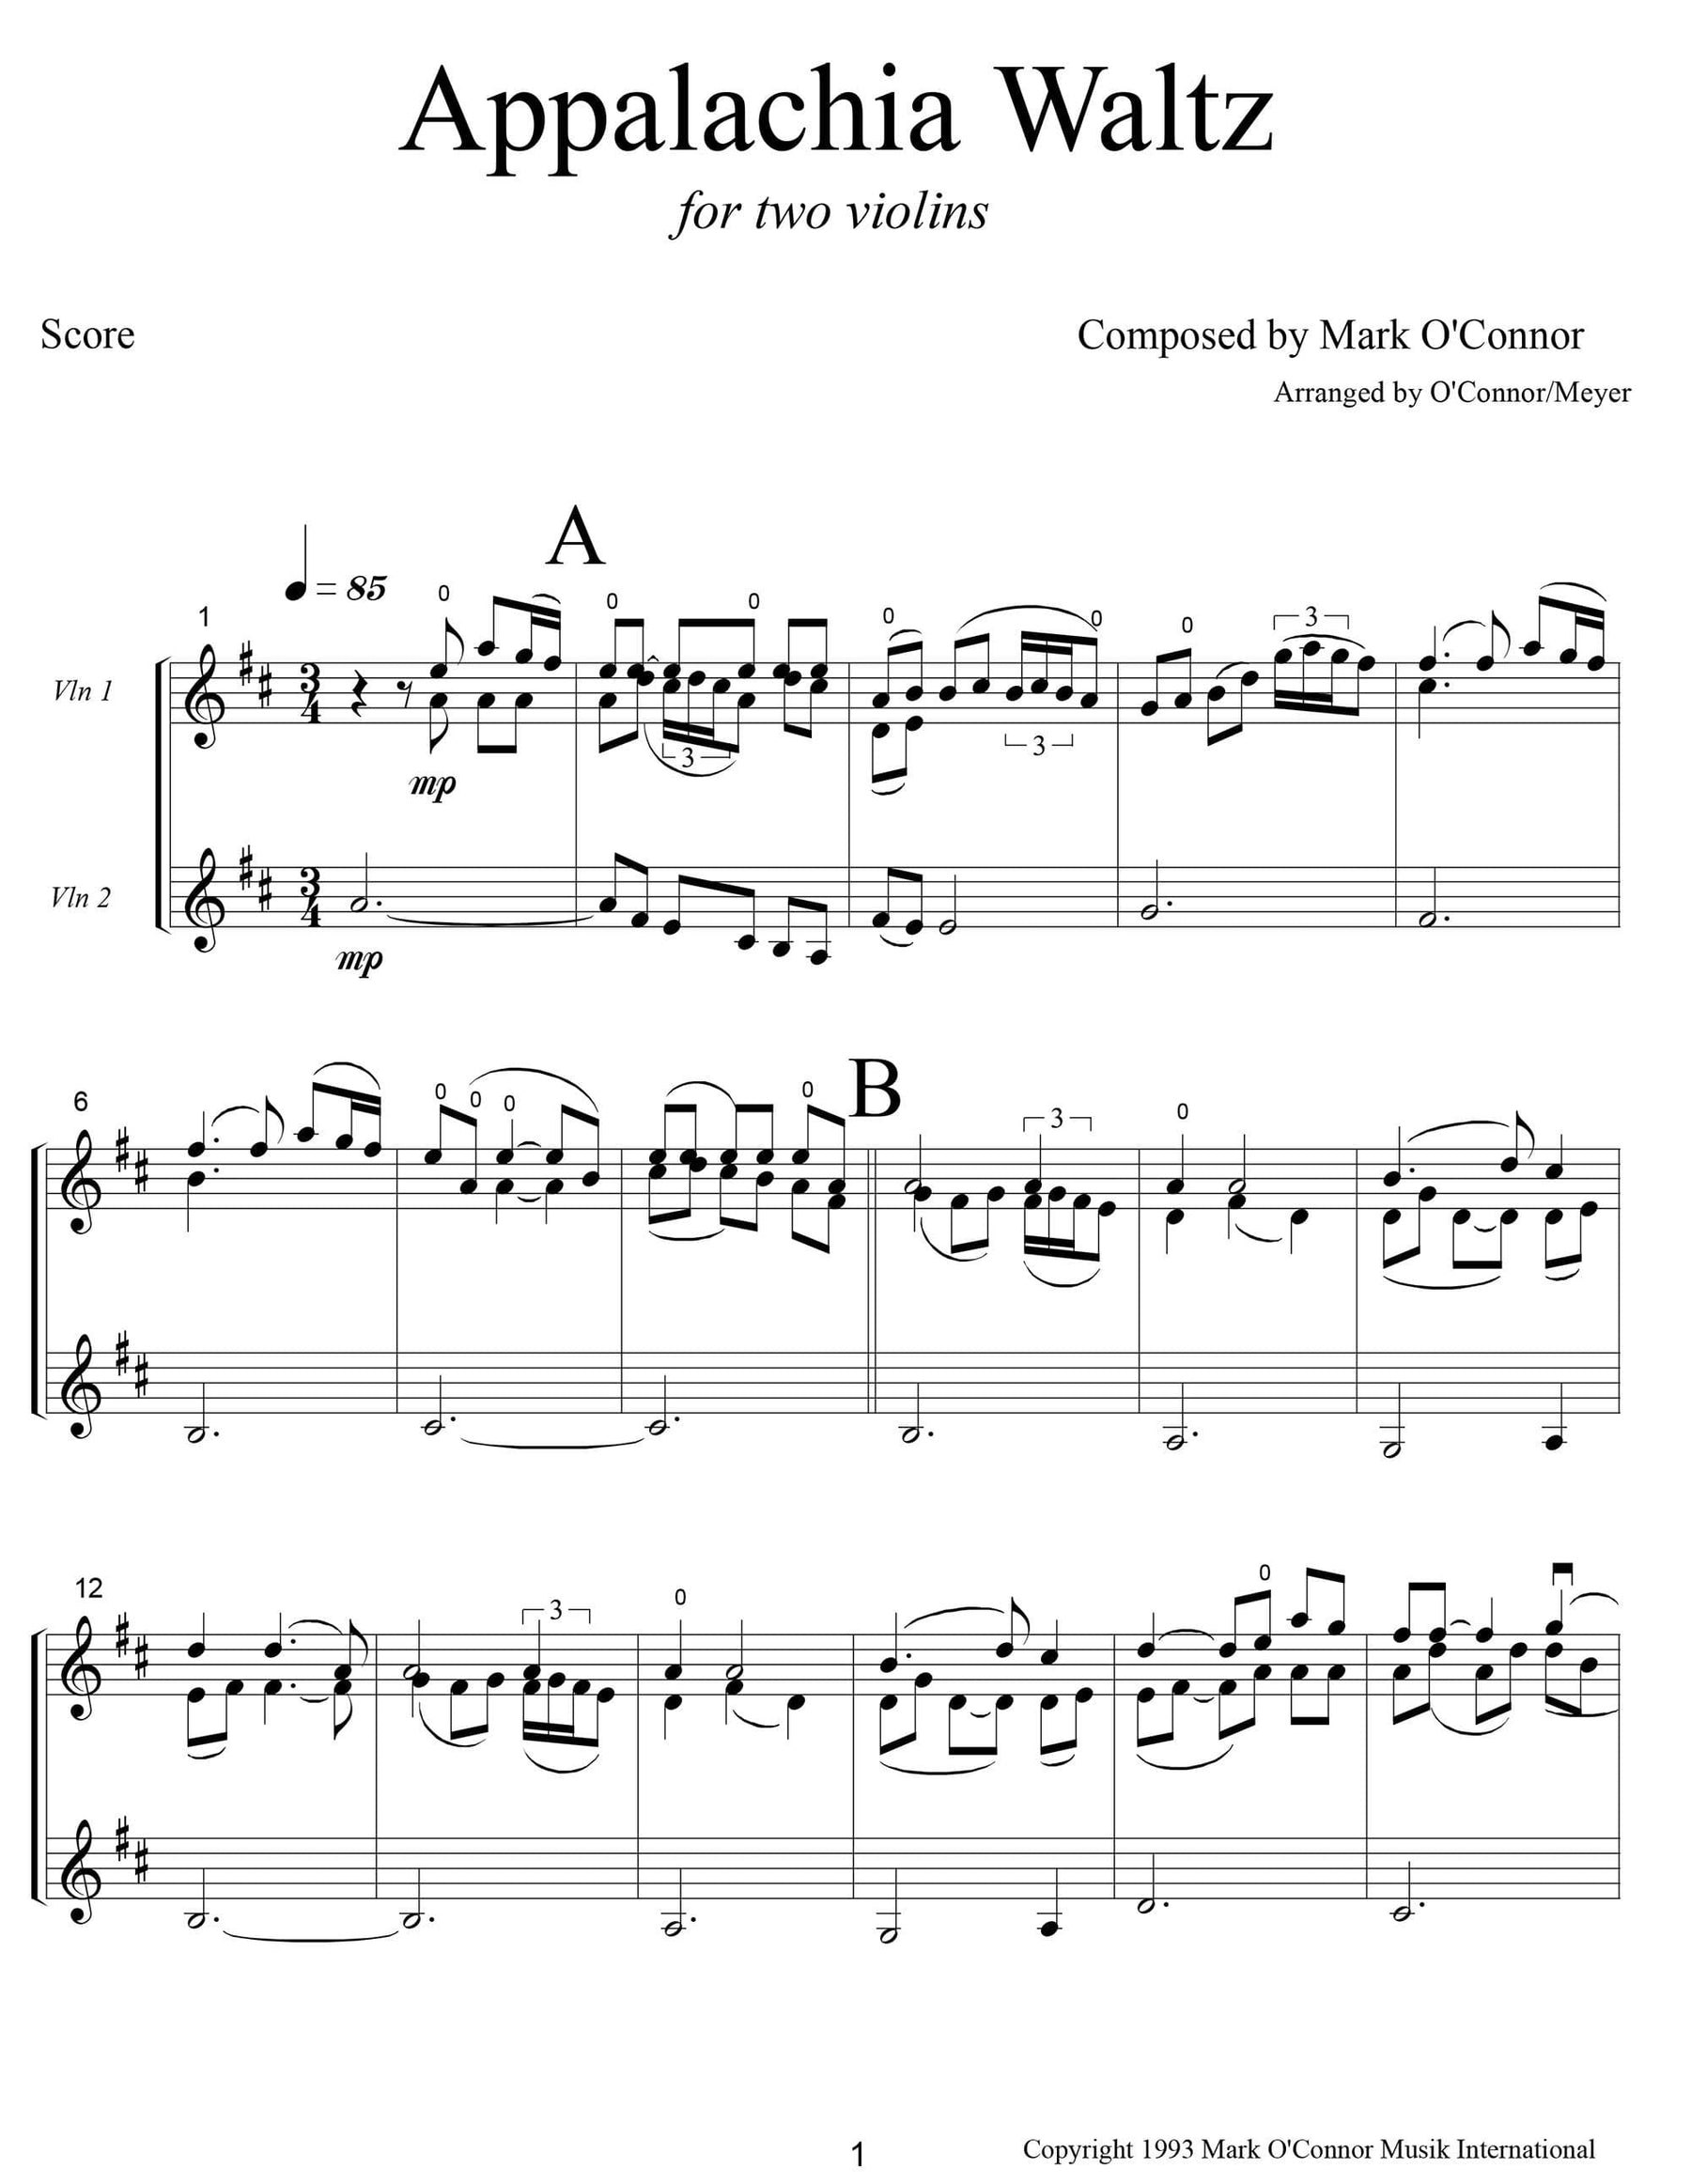 O'Connor, Mark - Appalachia Waltz for 2 Violins - Score - Digital Download